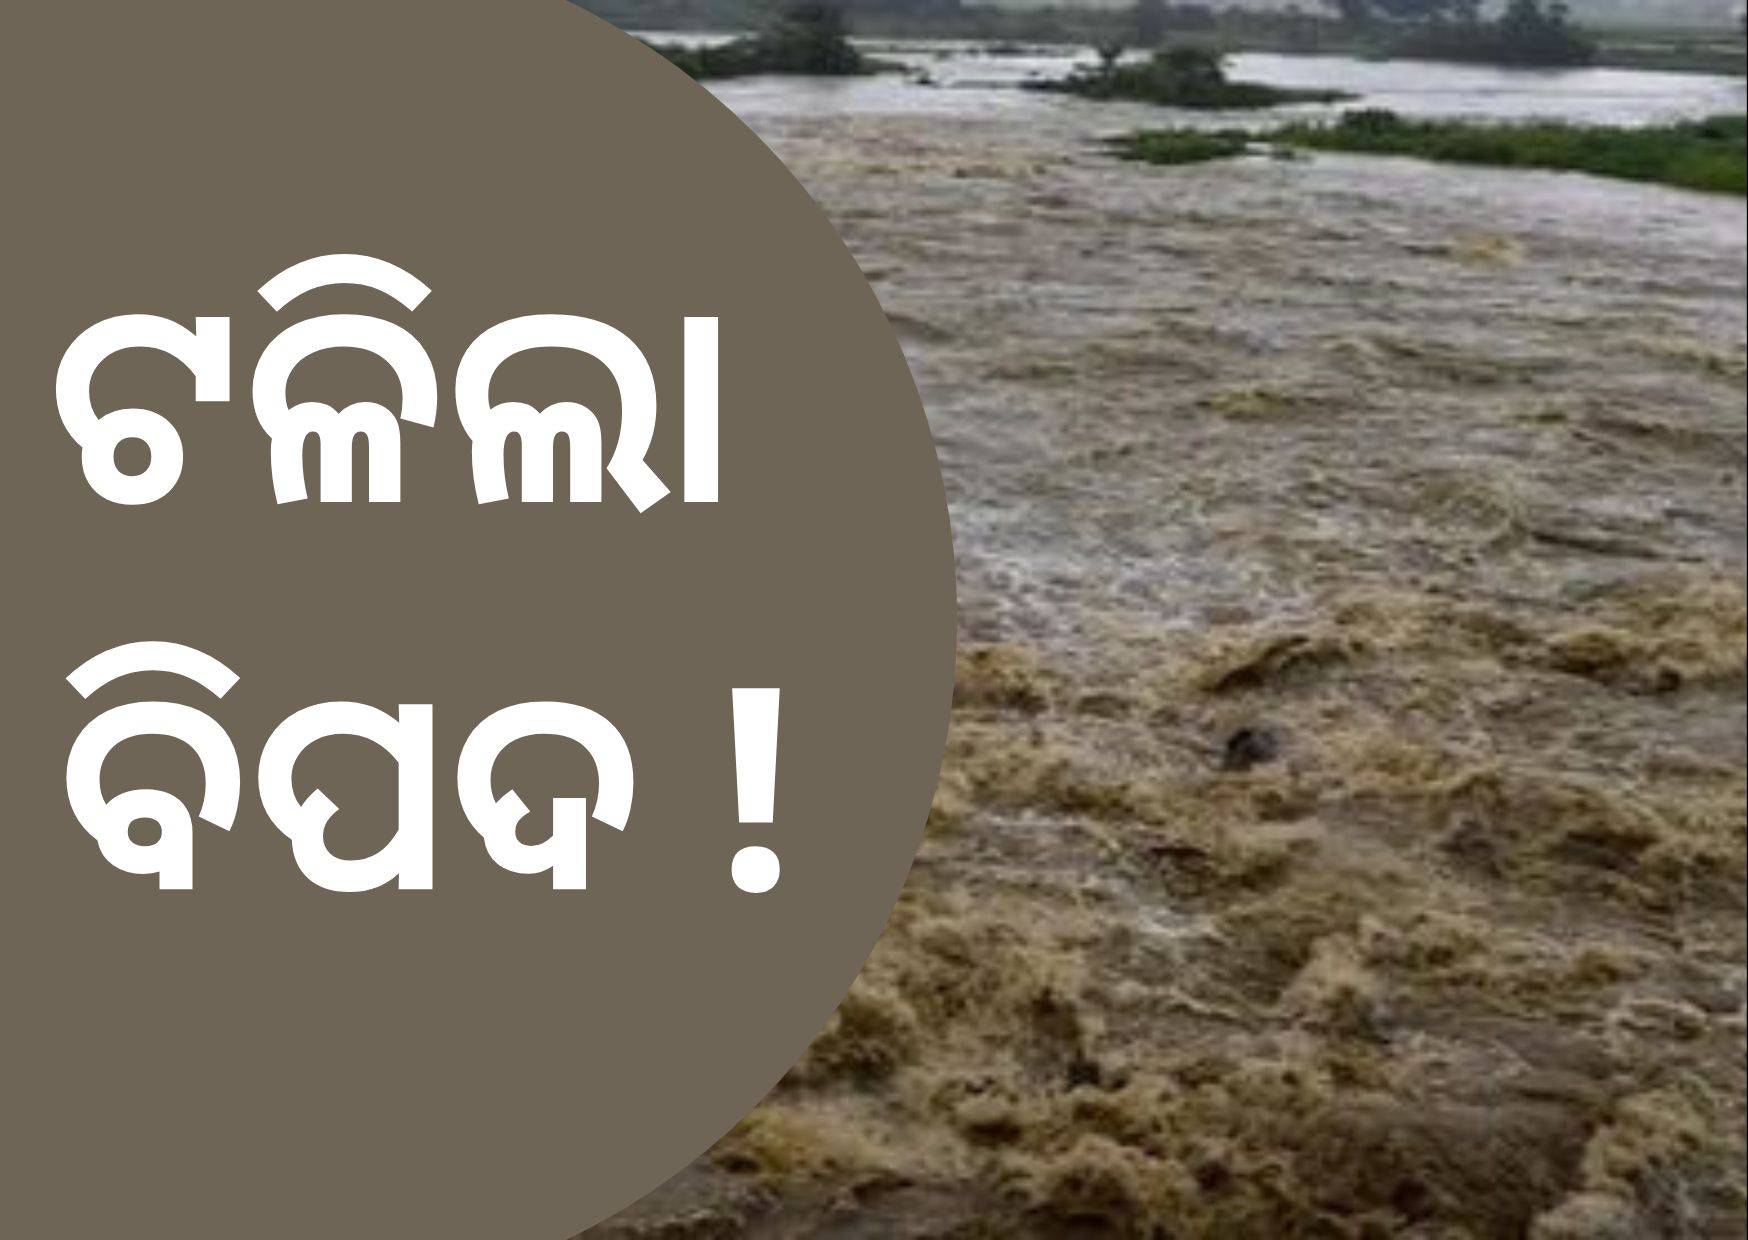 subarnarekha river Flood Water level decreases